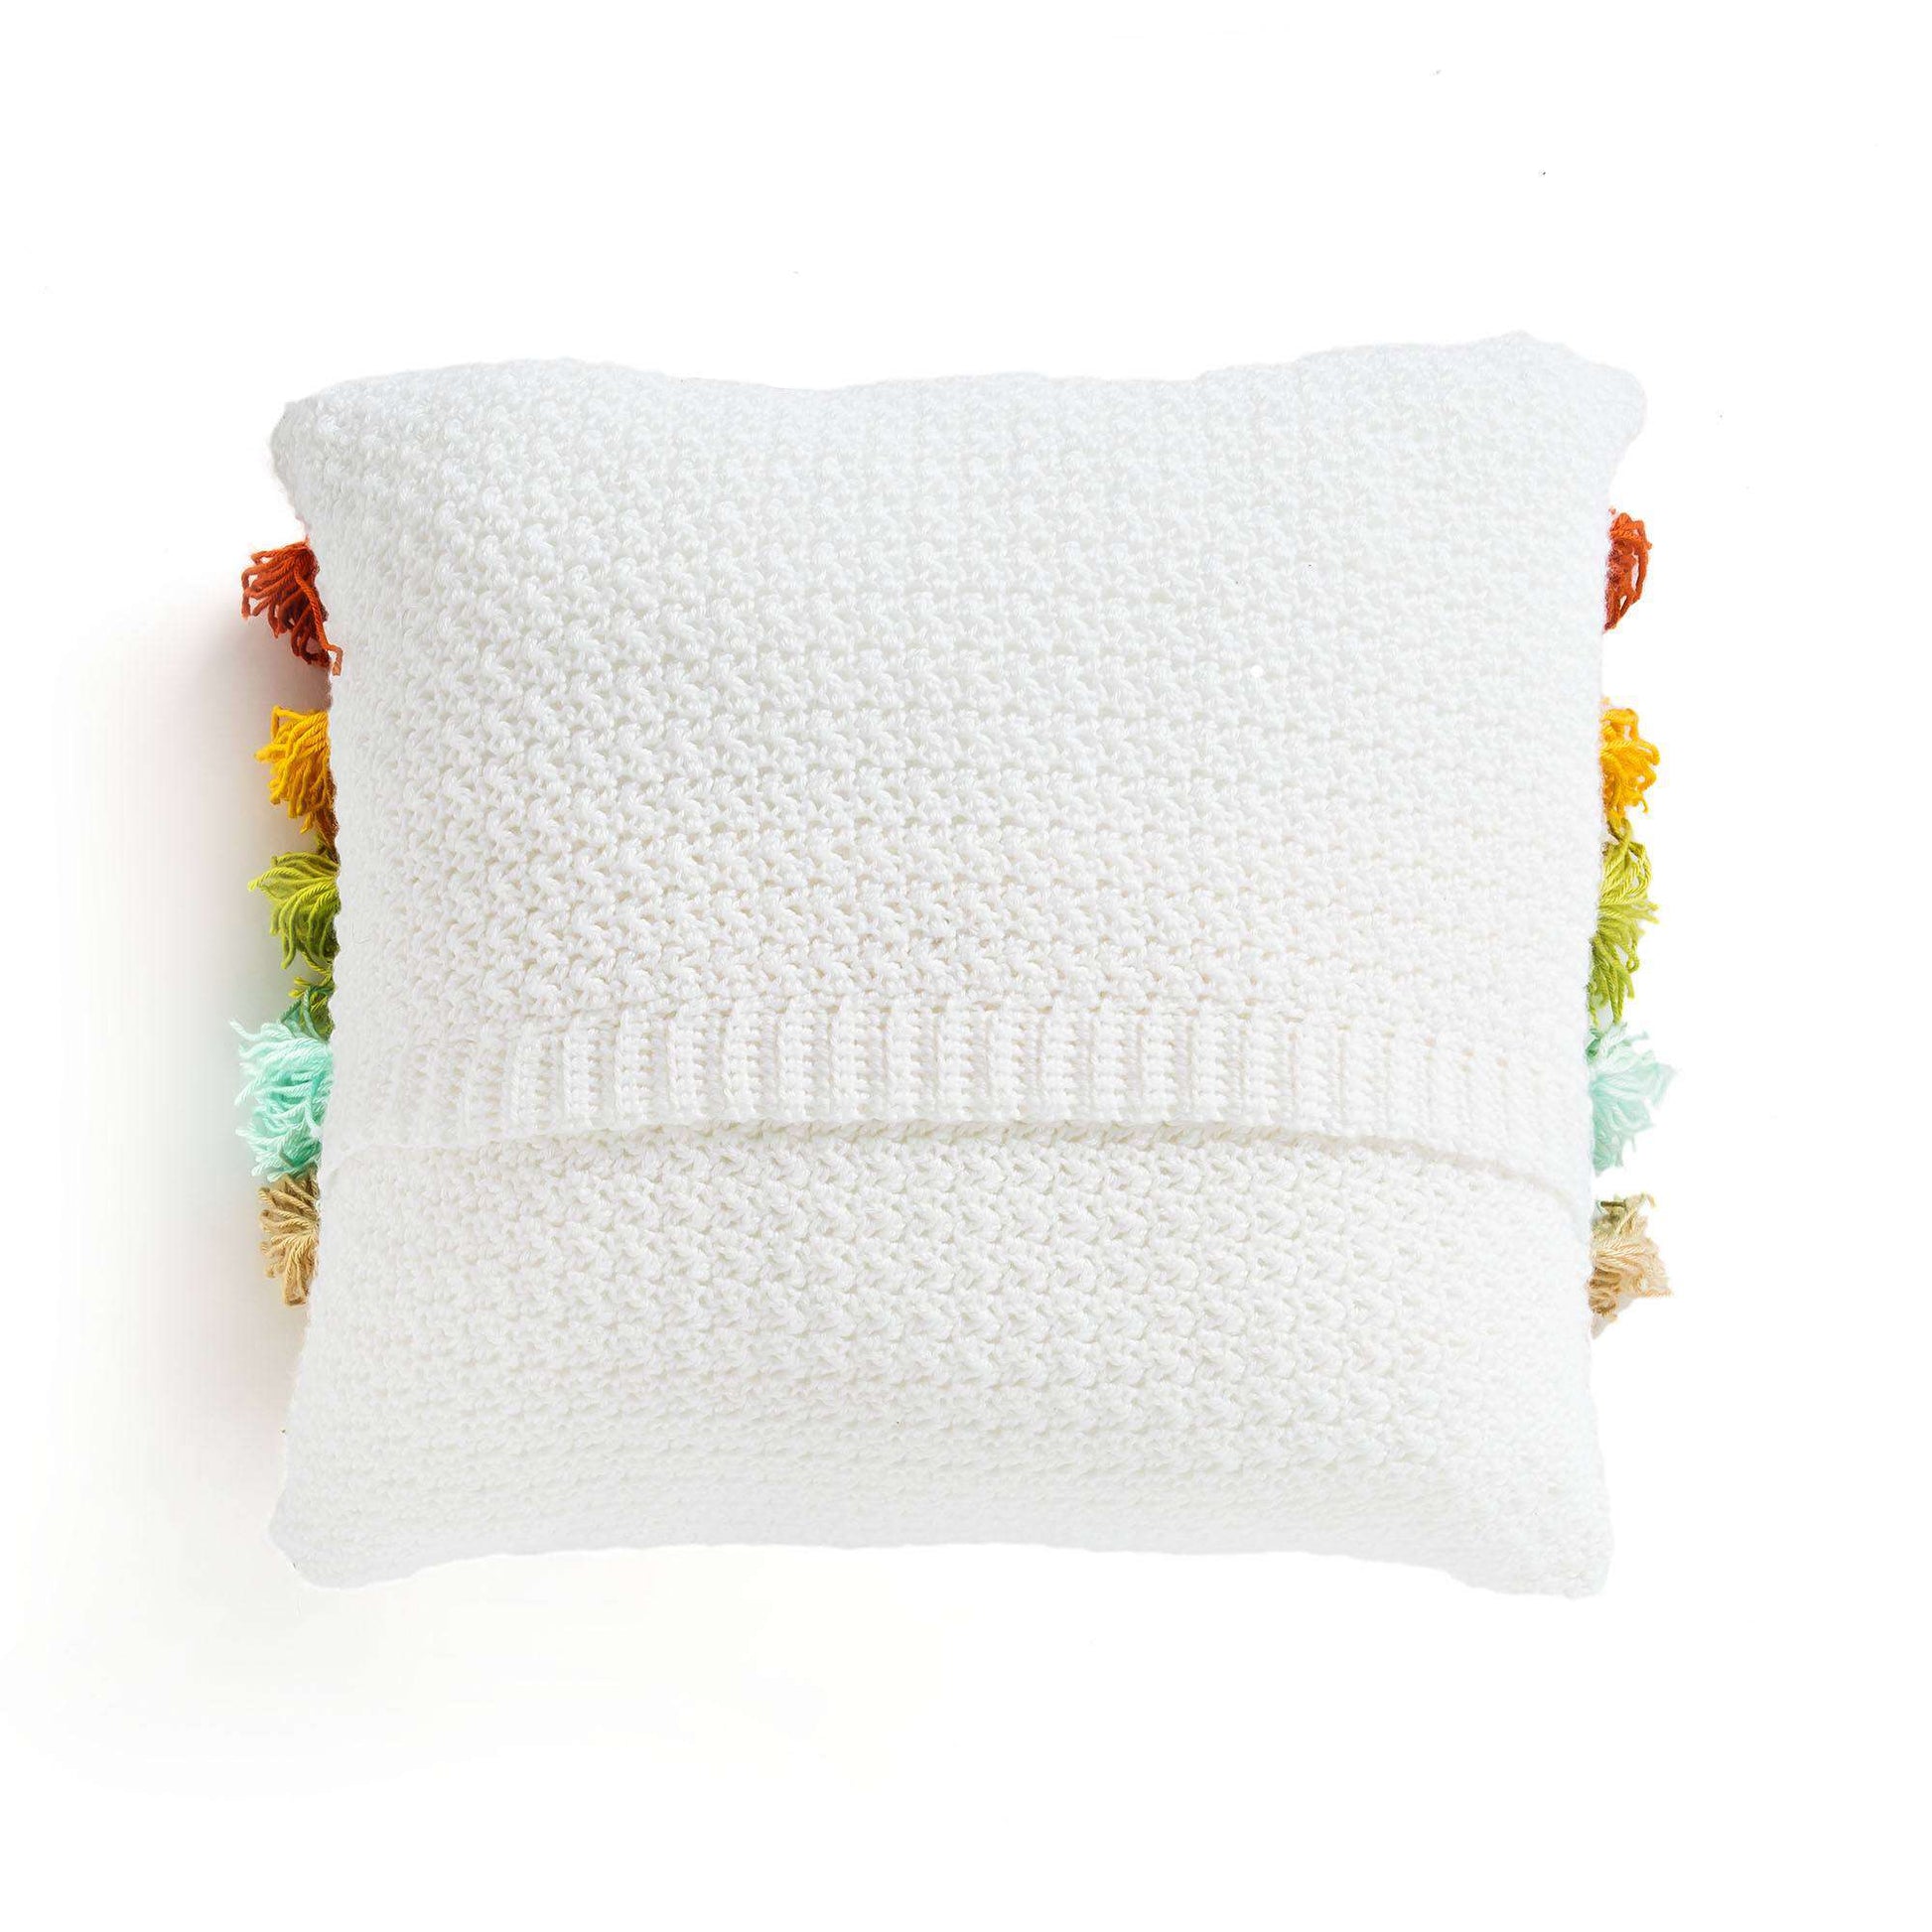 Free Caron Fabulous Fringe Crochet Pillow Pattern